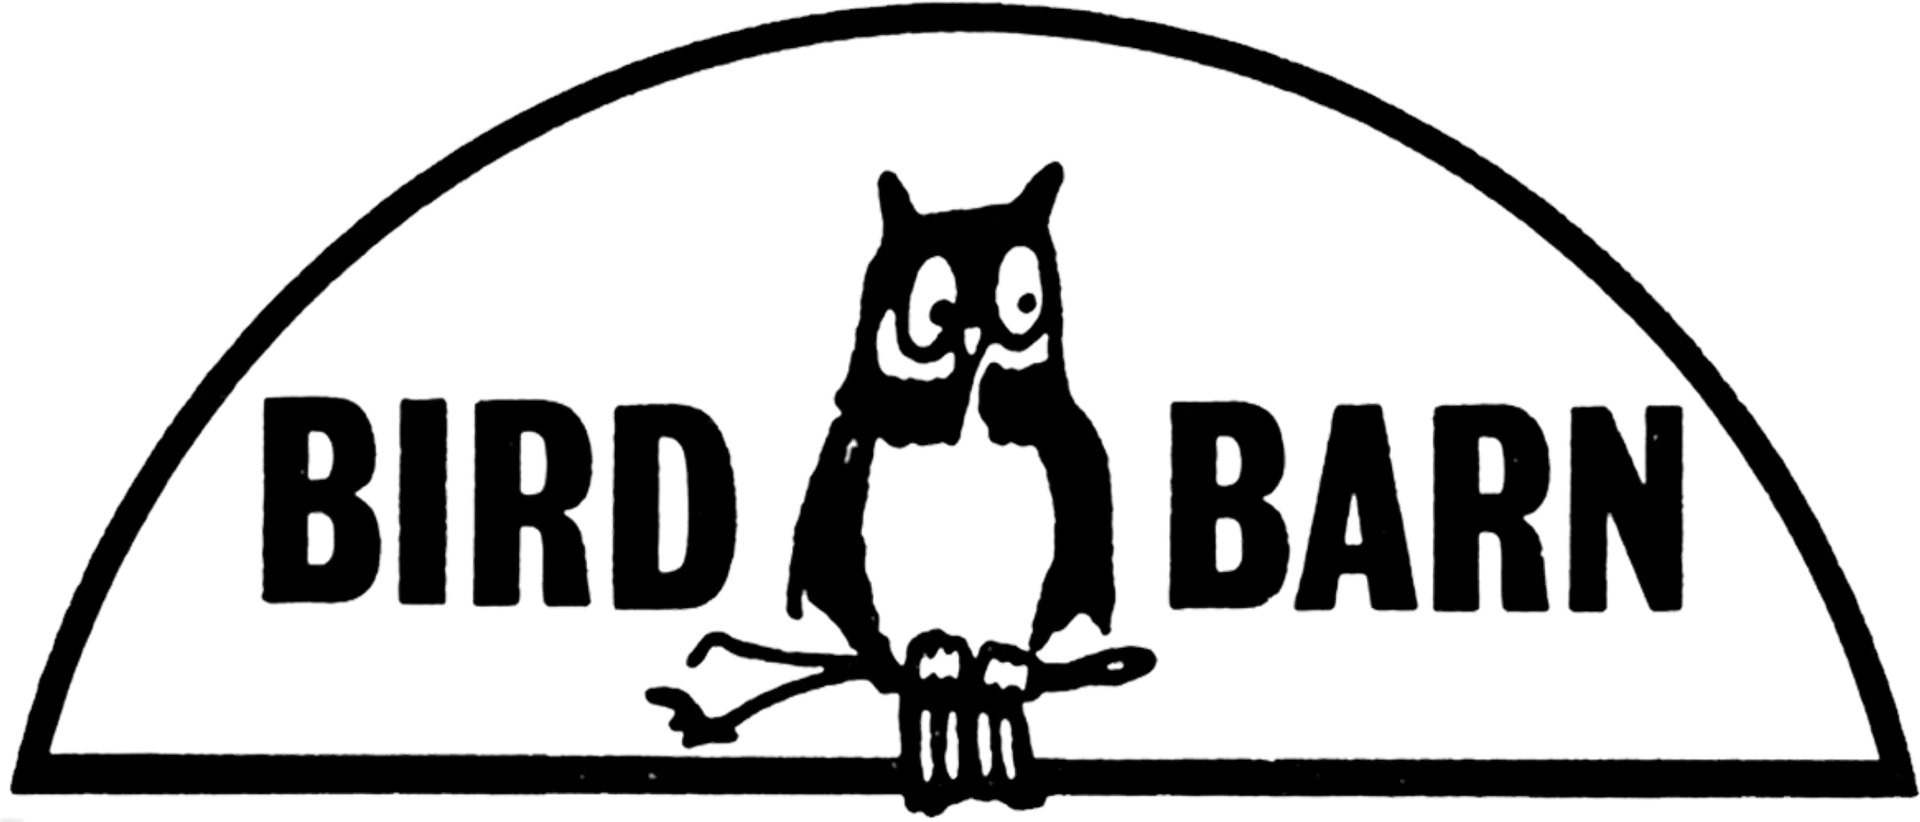 BIRD BARN PET STORE logo. Current weekly ad